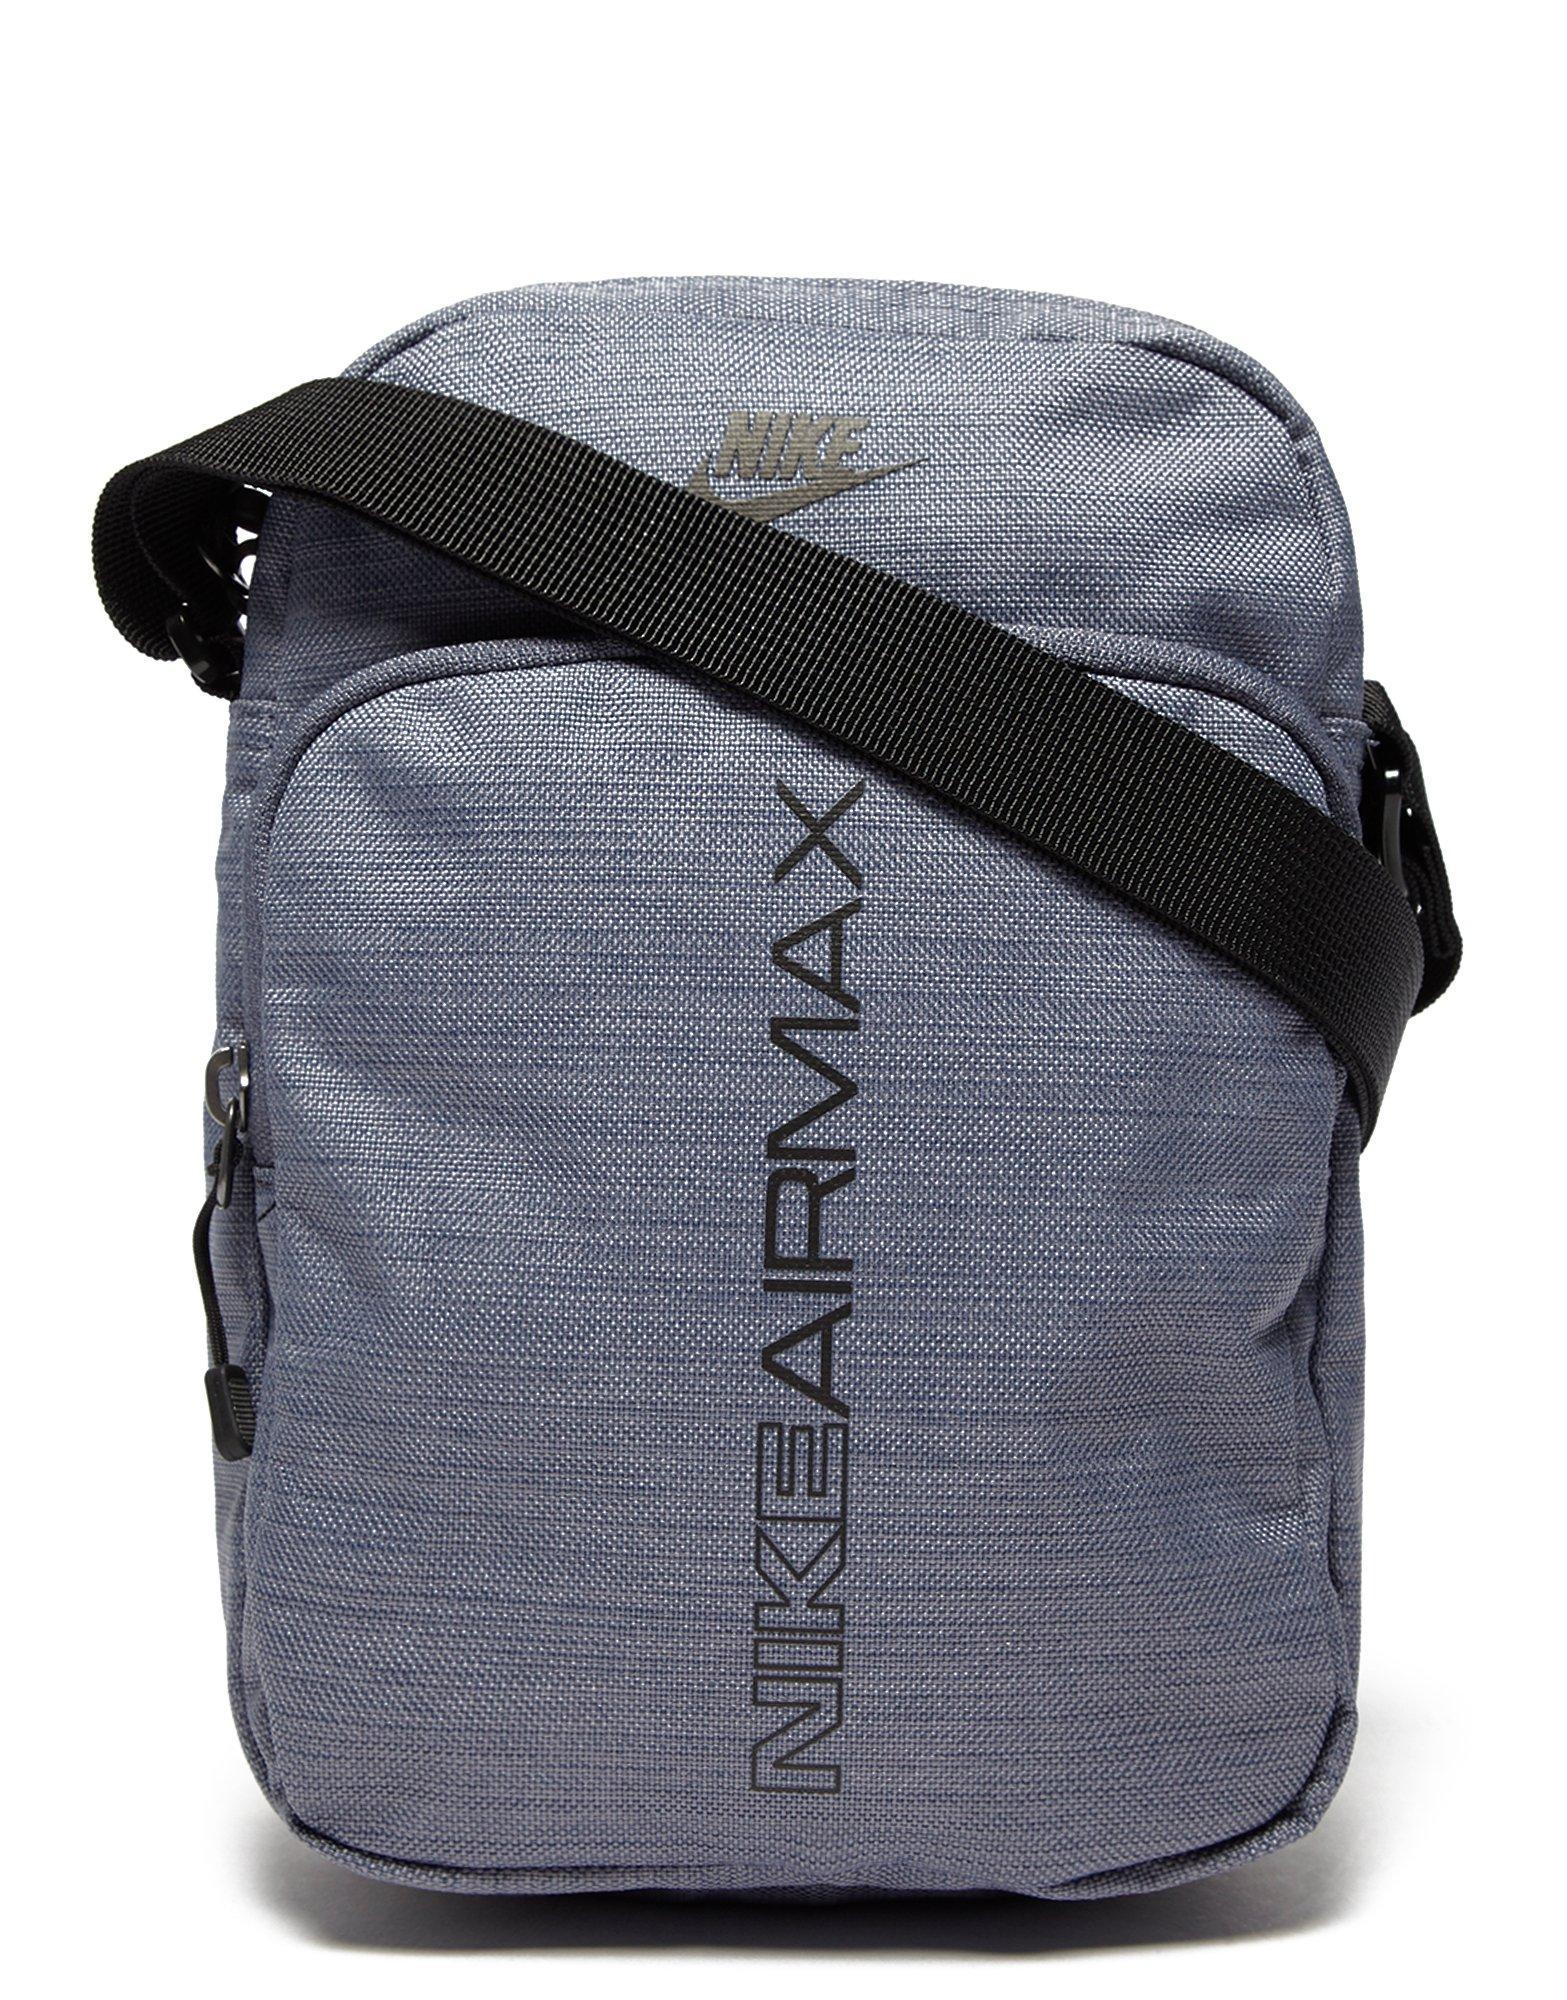 Lyst - Nike Air Max Small Bag in Grey for Men